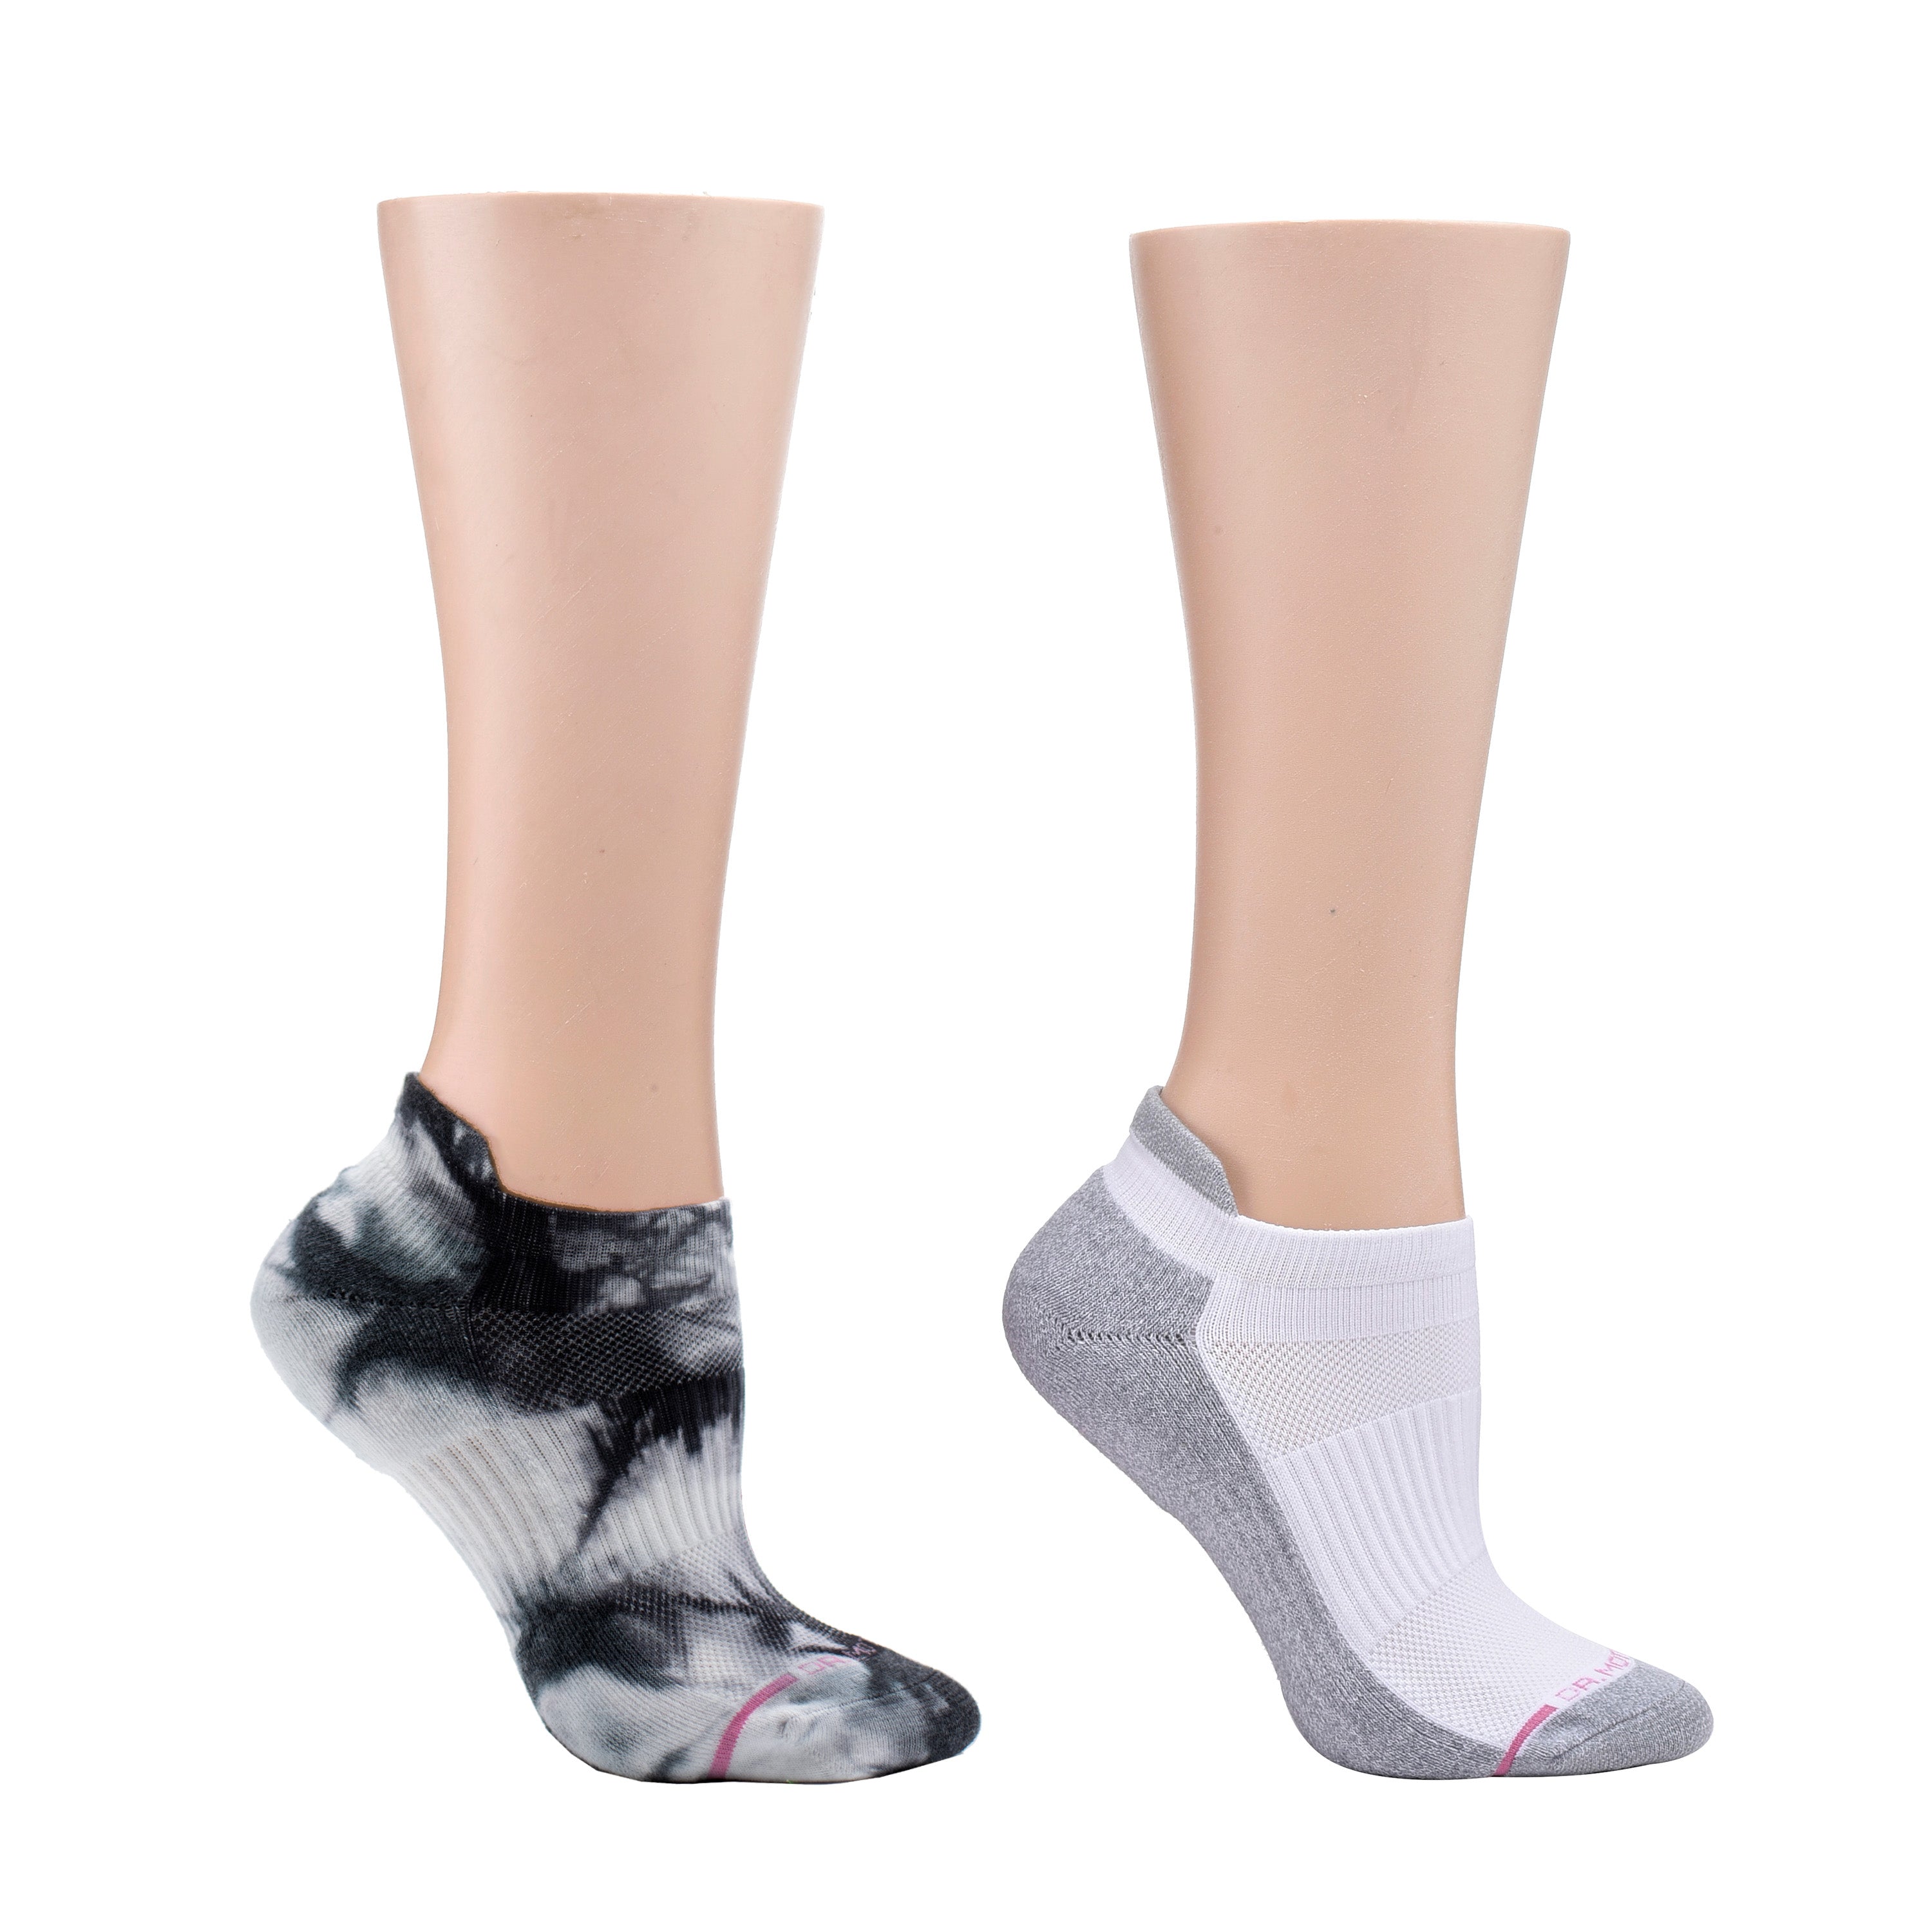 Mushrooms | Ankle Compression Socks For Women